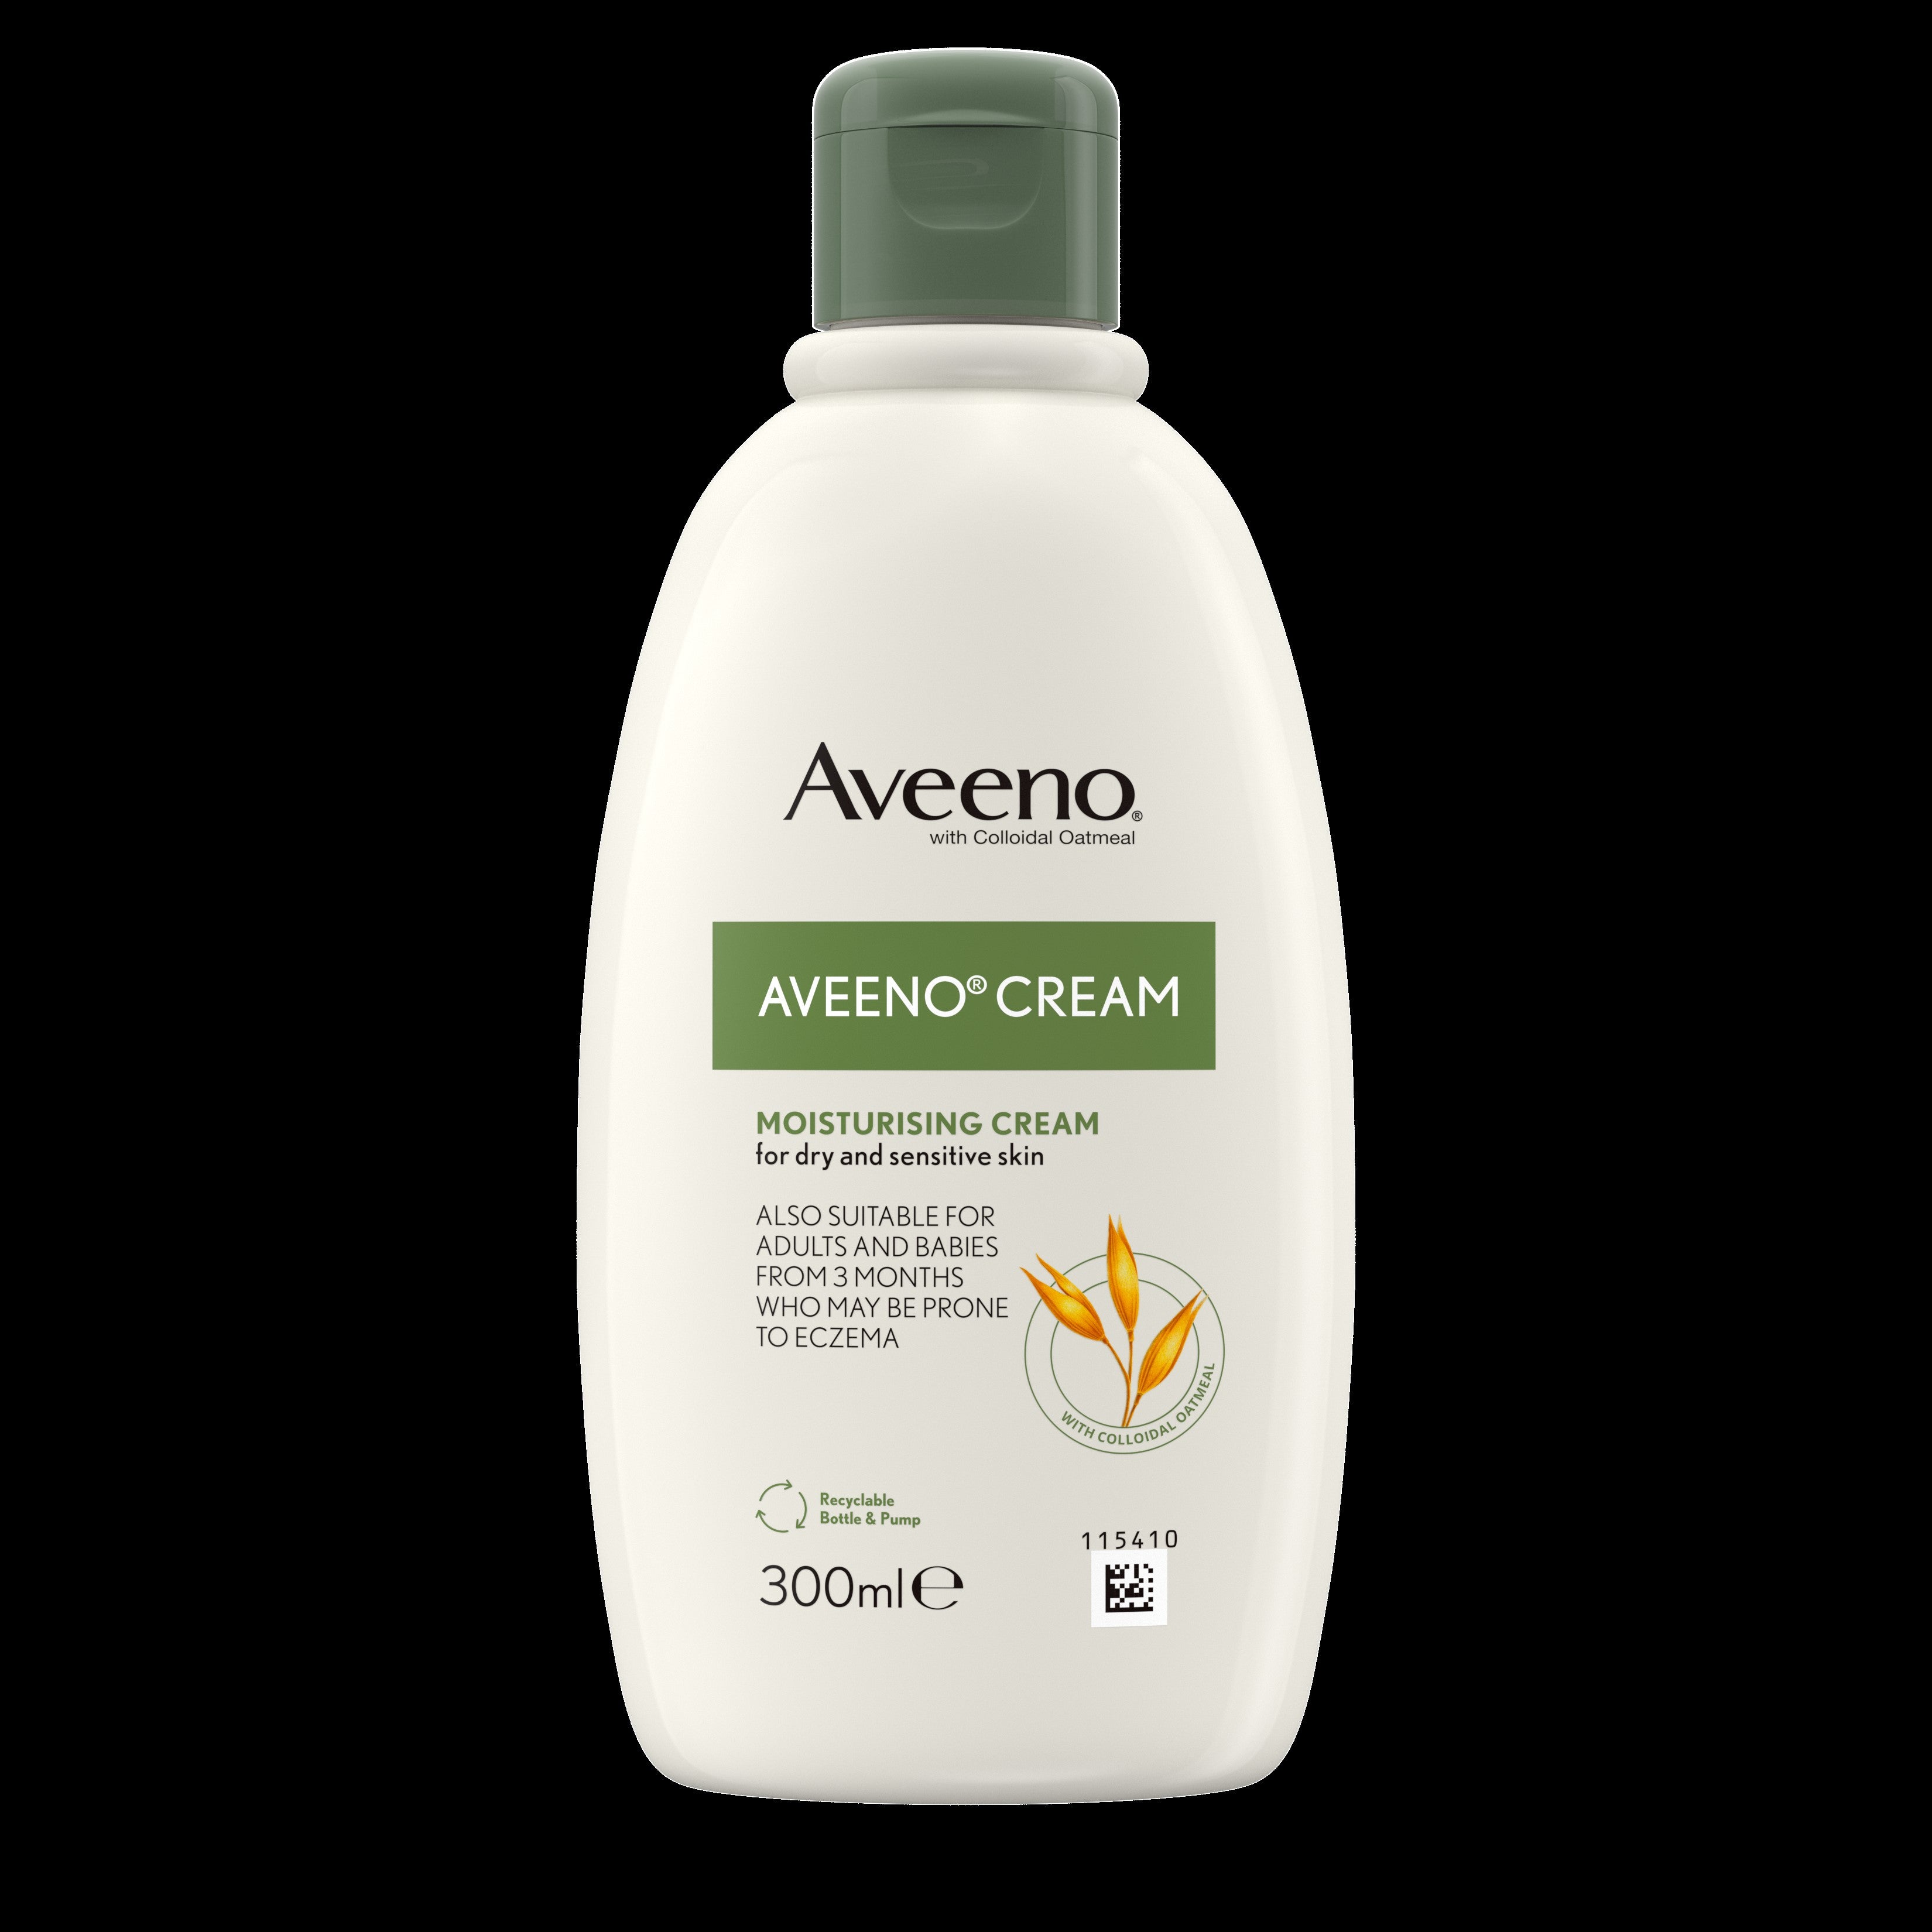 Buy Aveeno Baby Daily Care Barrier Cream 100ml · Seychelles